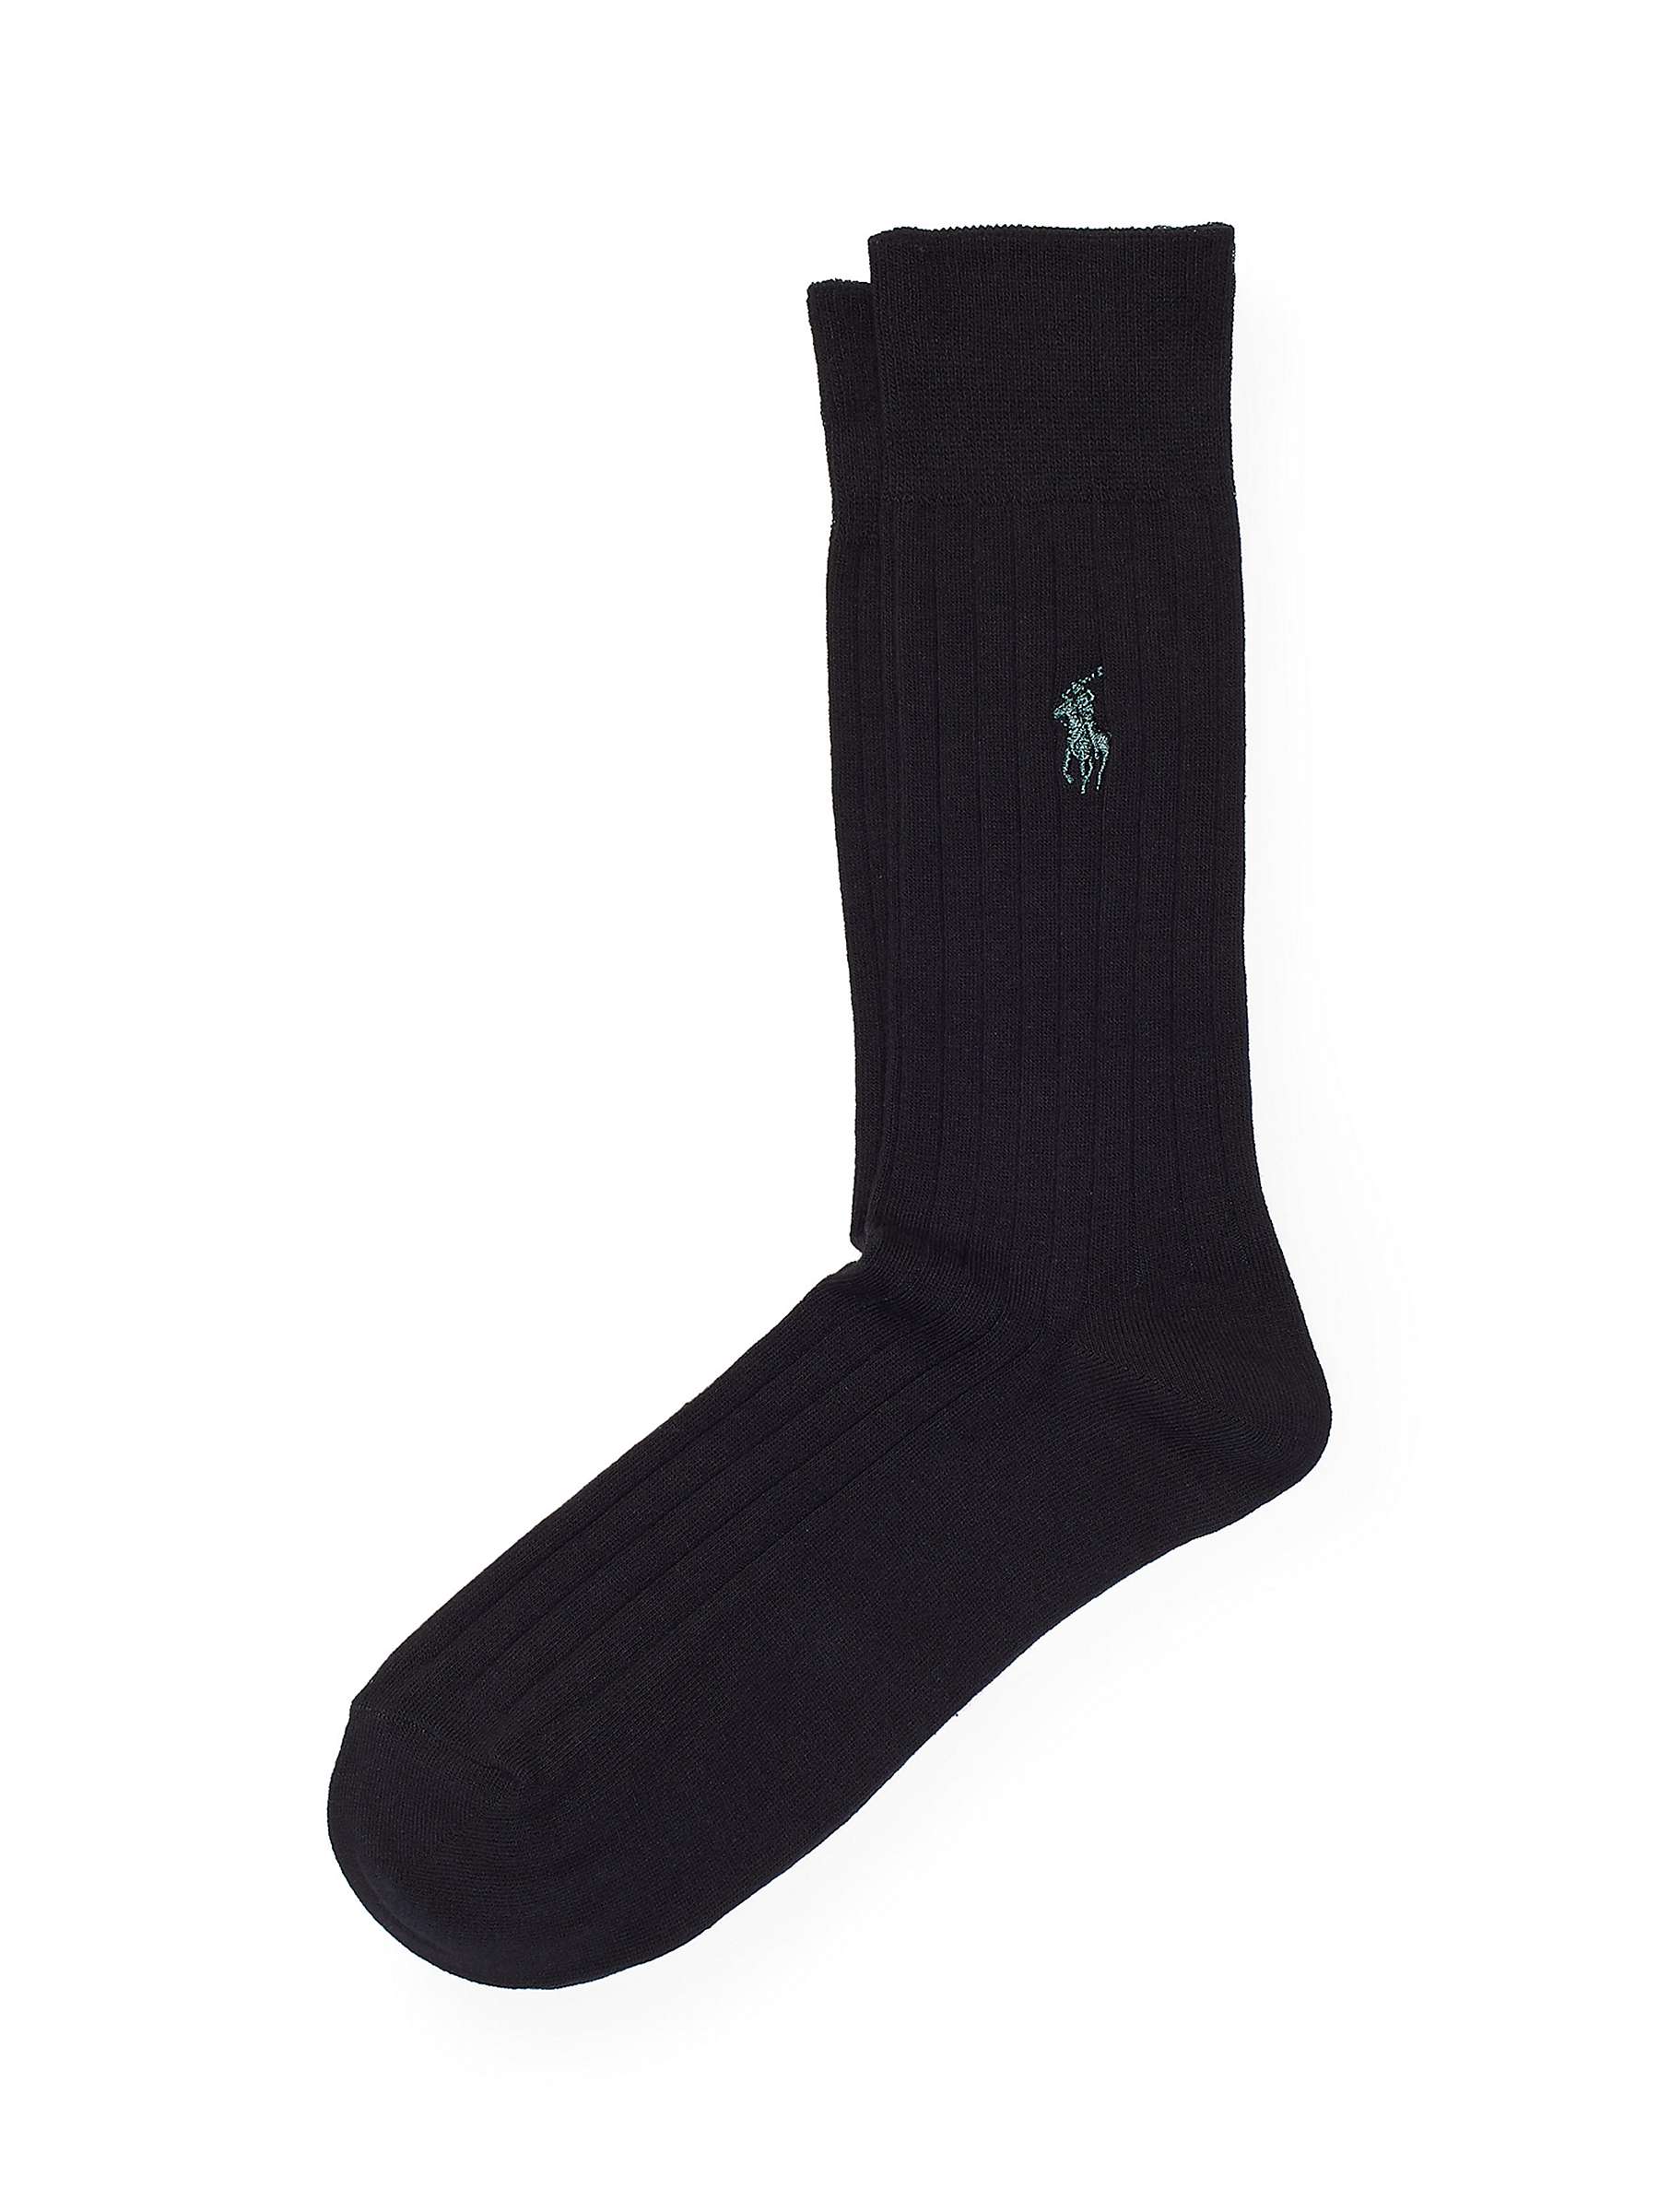 Buy Polo Ralph Lauren Egyptian Cotton Socks Online at johnlewis.com